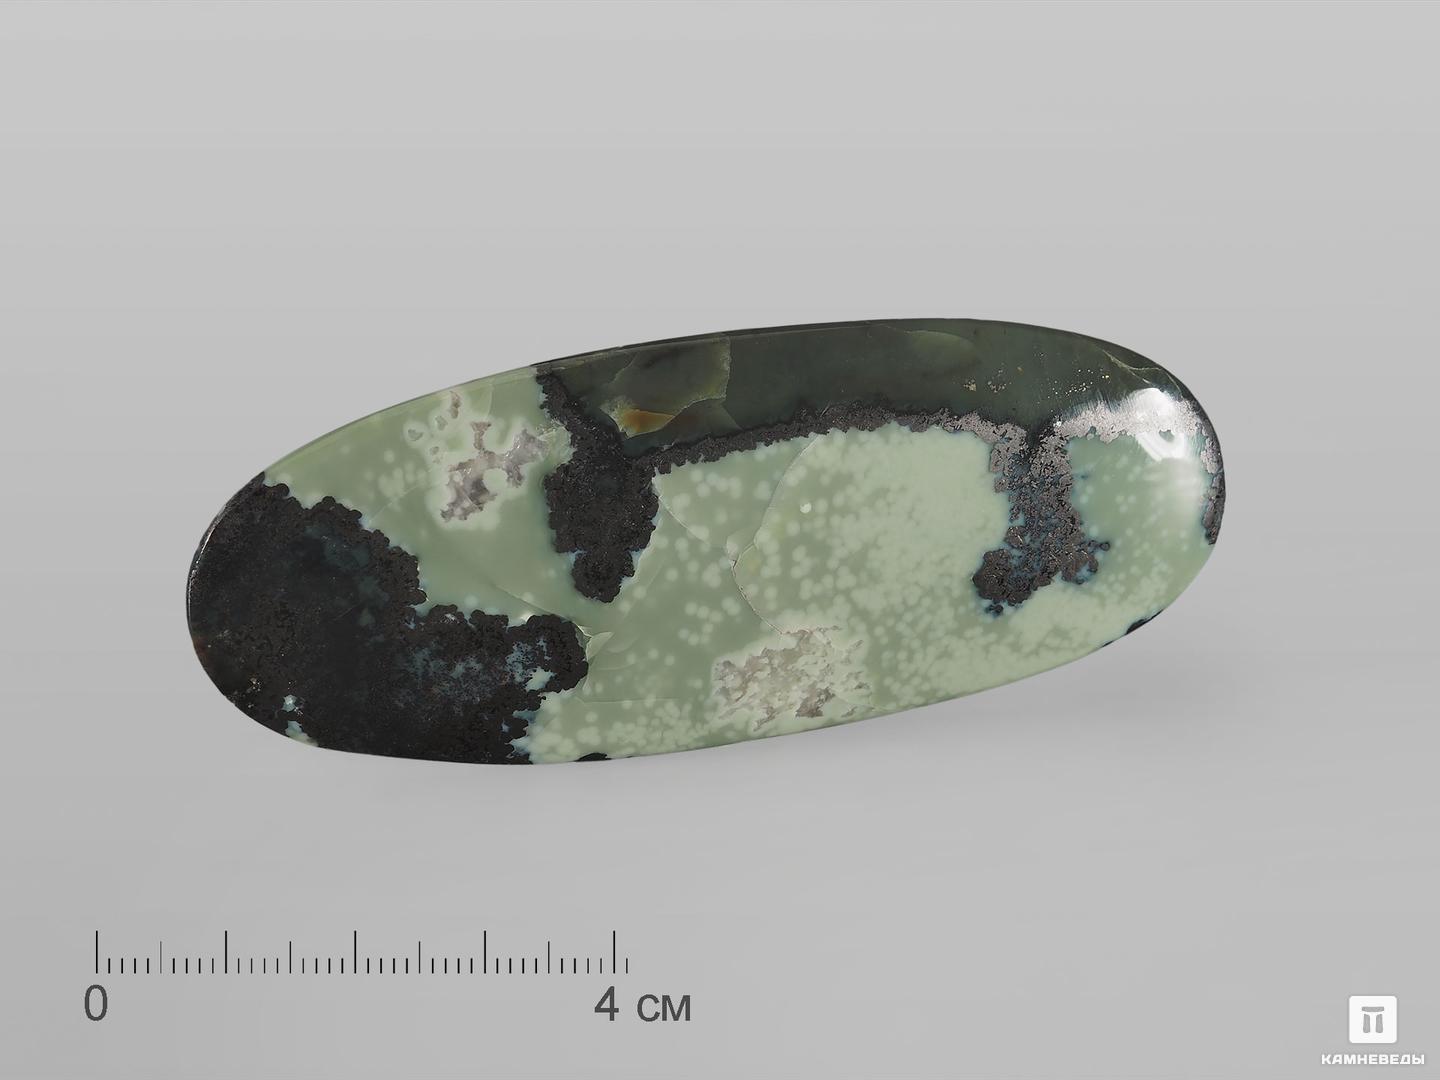 Хантигирит (тейский жад), полированная галька 8х3,3х0,7 см, 19006, фото 1